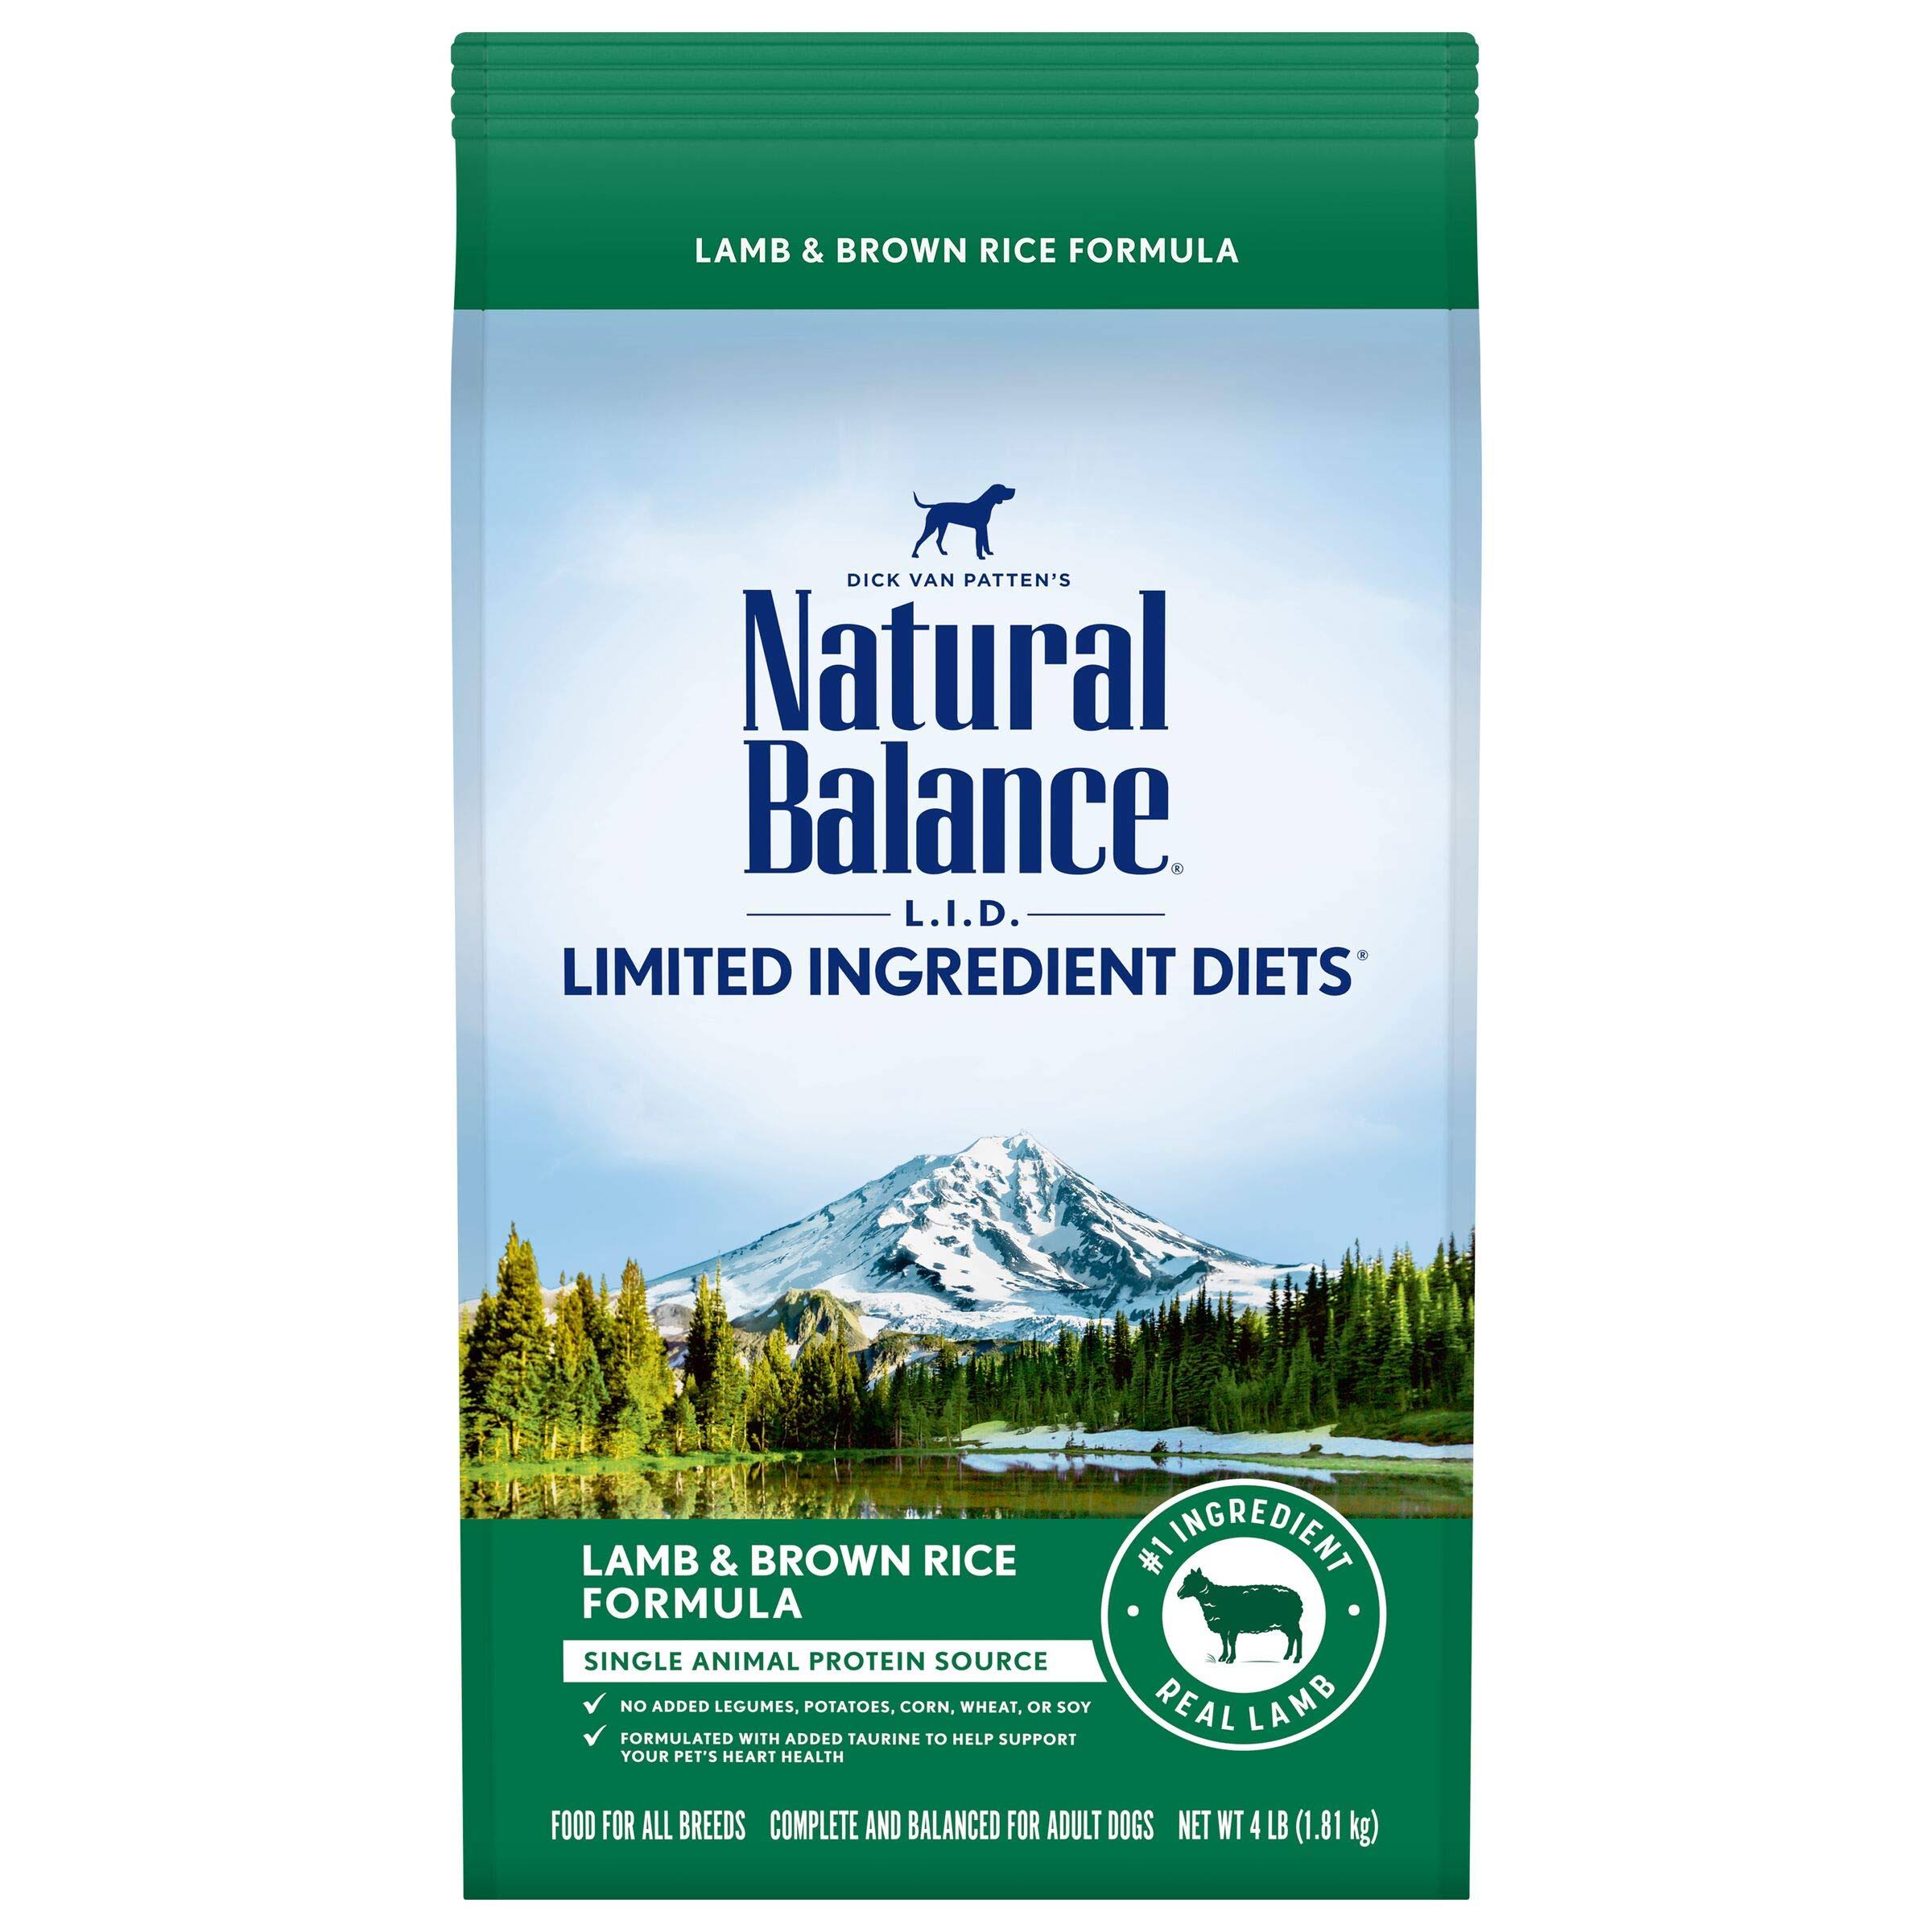 Natural Balance Limited Ingredient Diets Dog Food, Lamb & Brown Rice Formula - 4 lb